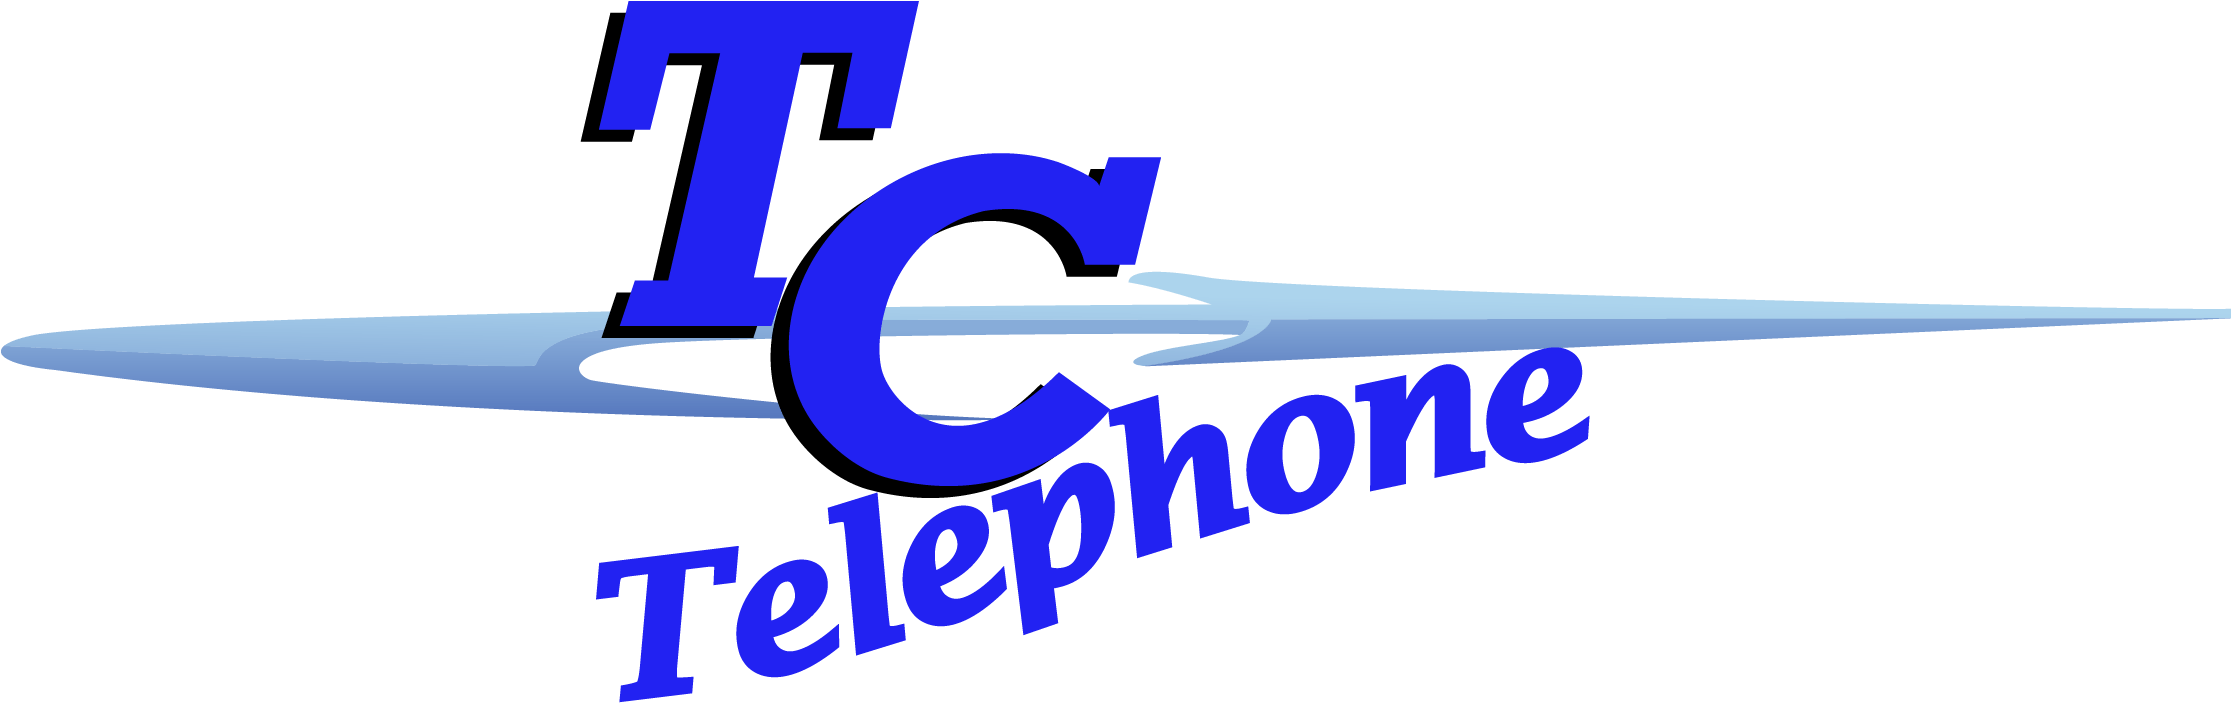 Telephone Transparent Logo - Download HD Tc Telephone Logo - Tc Telephone Transparent PNG Image ...